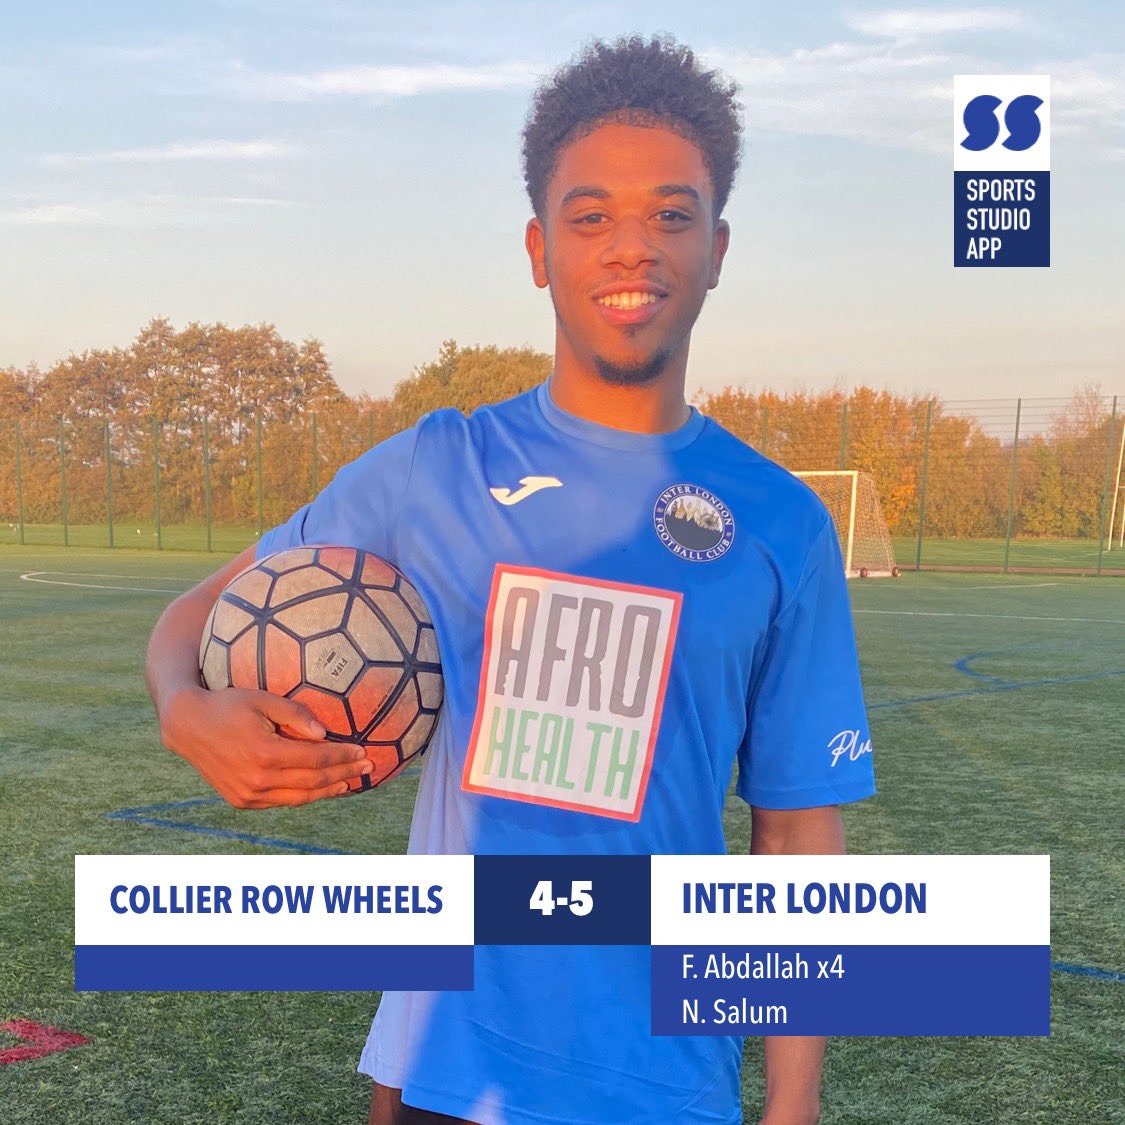 INTER LONDON FC (@inter.londonfc) • Instagram photos and videos